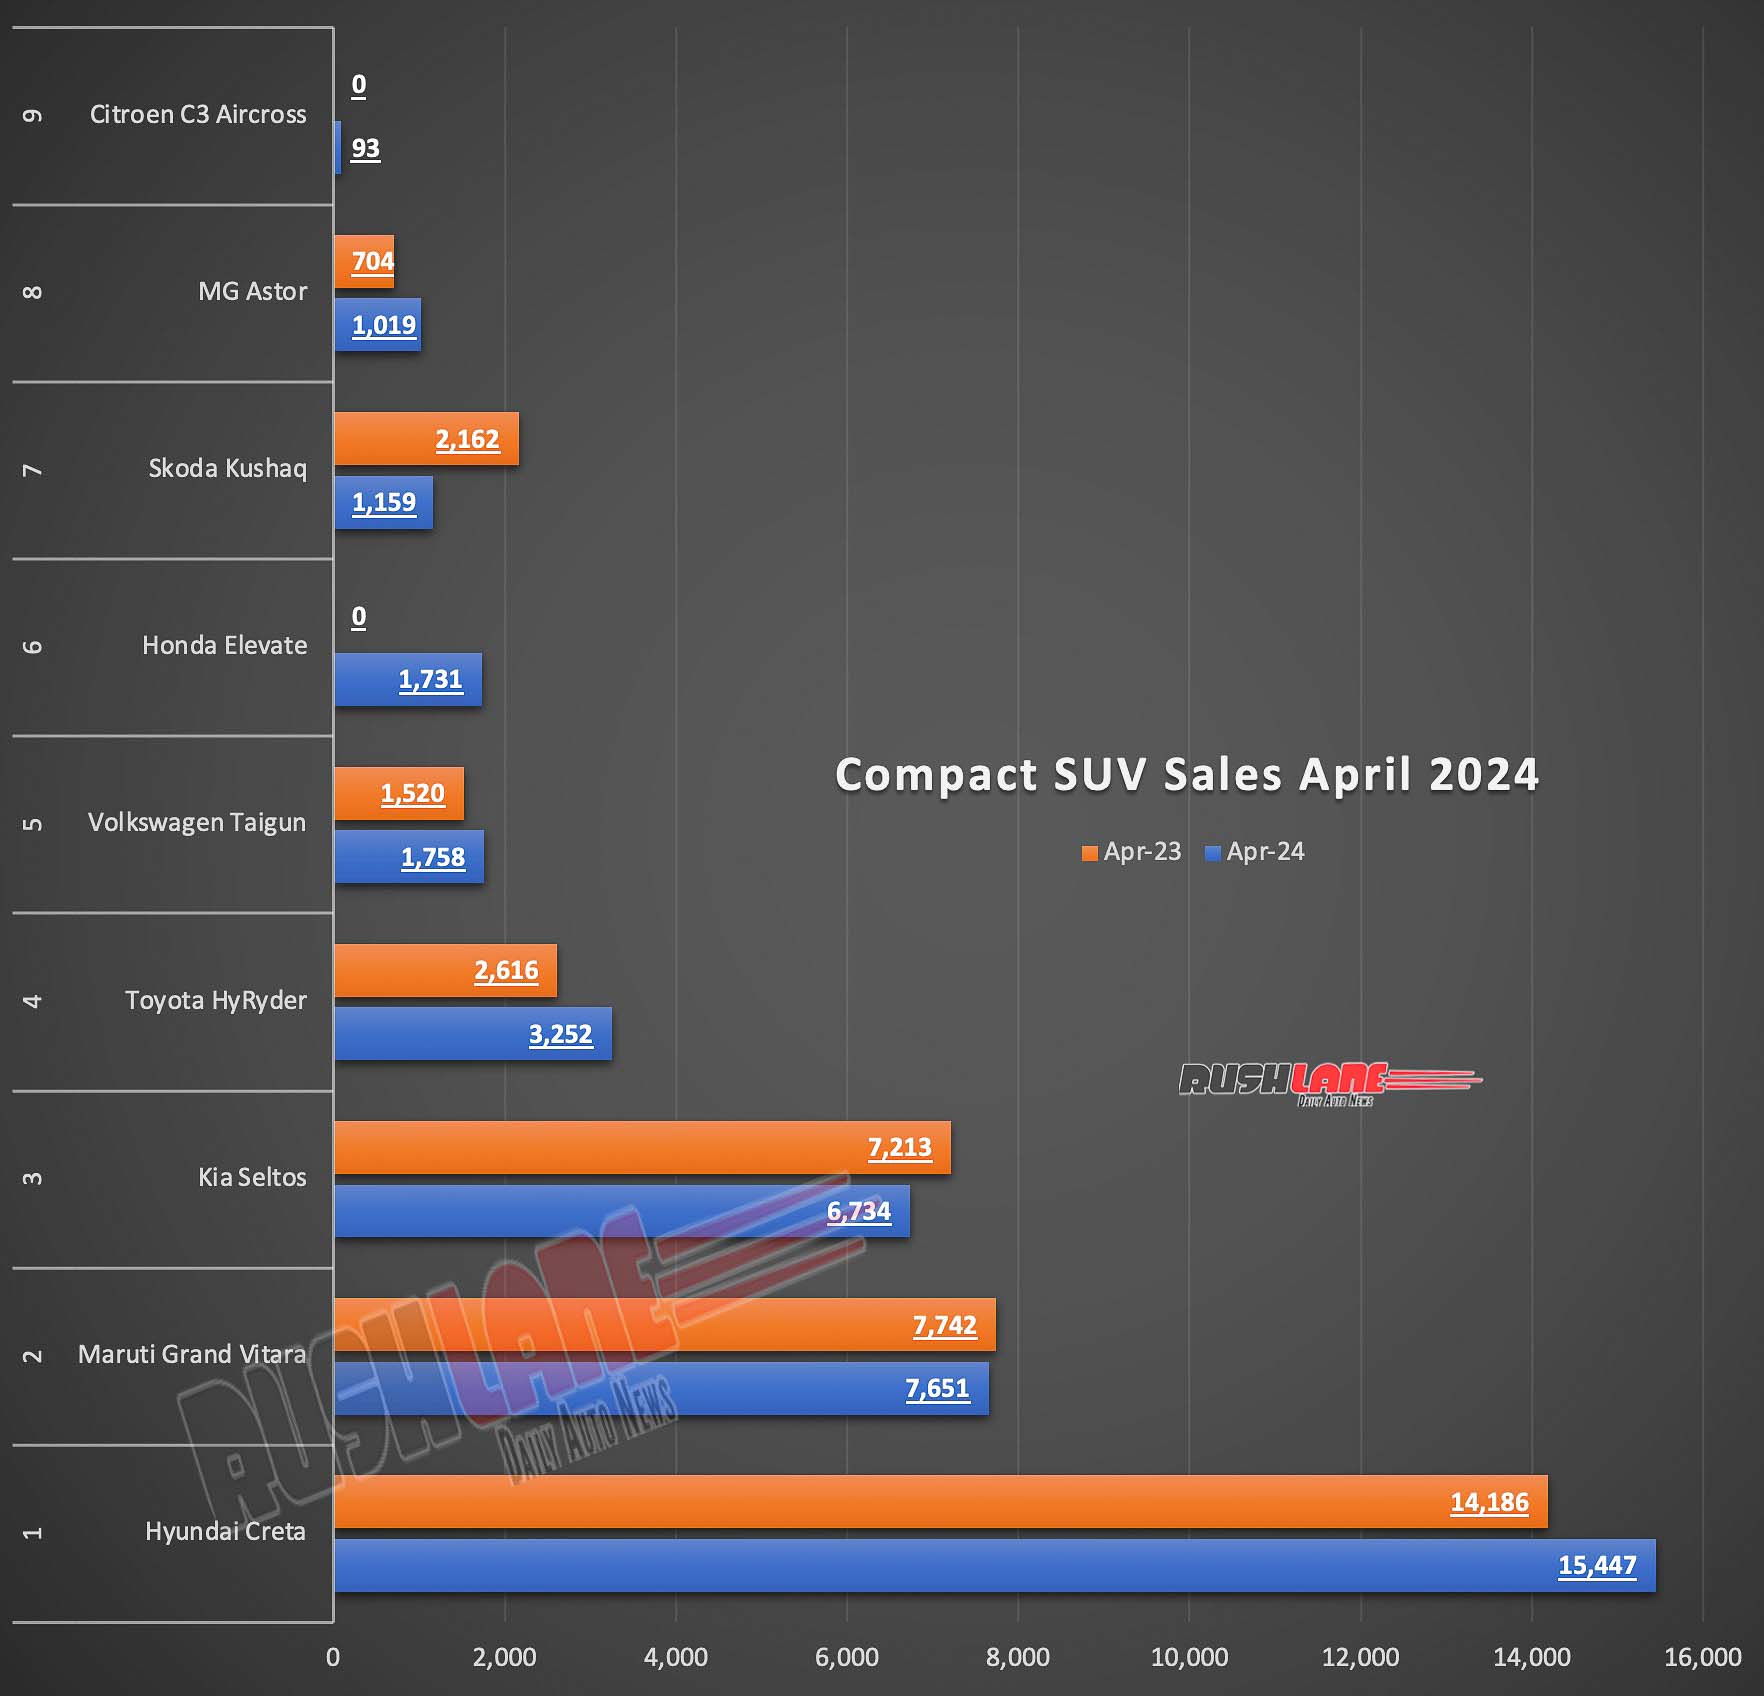 Compact SUV Sales April 2024